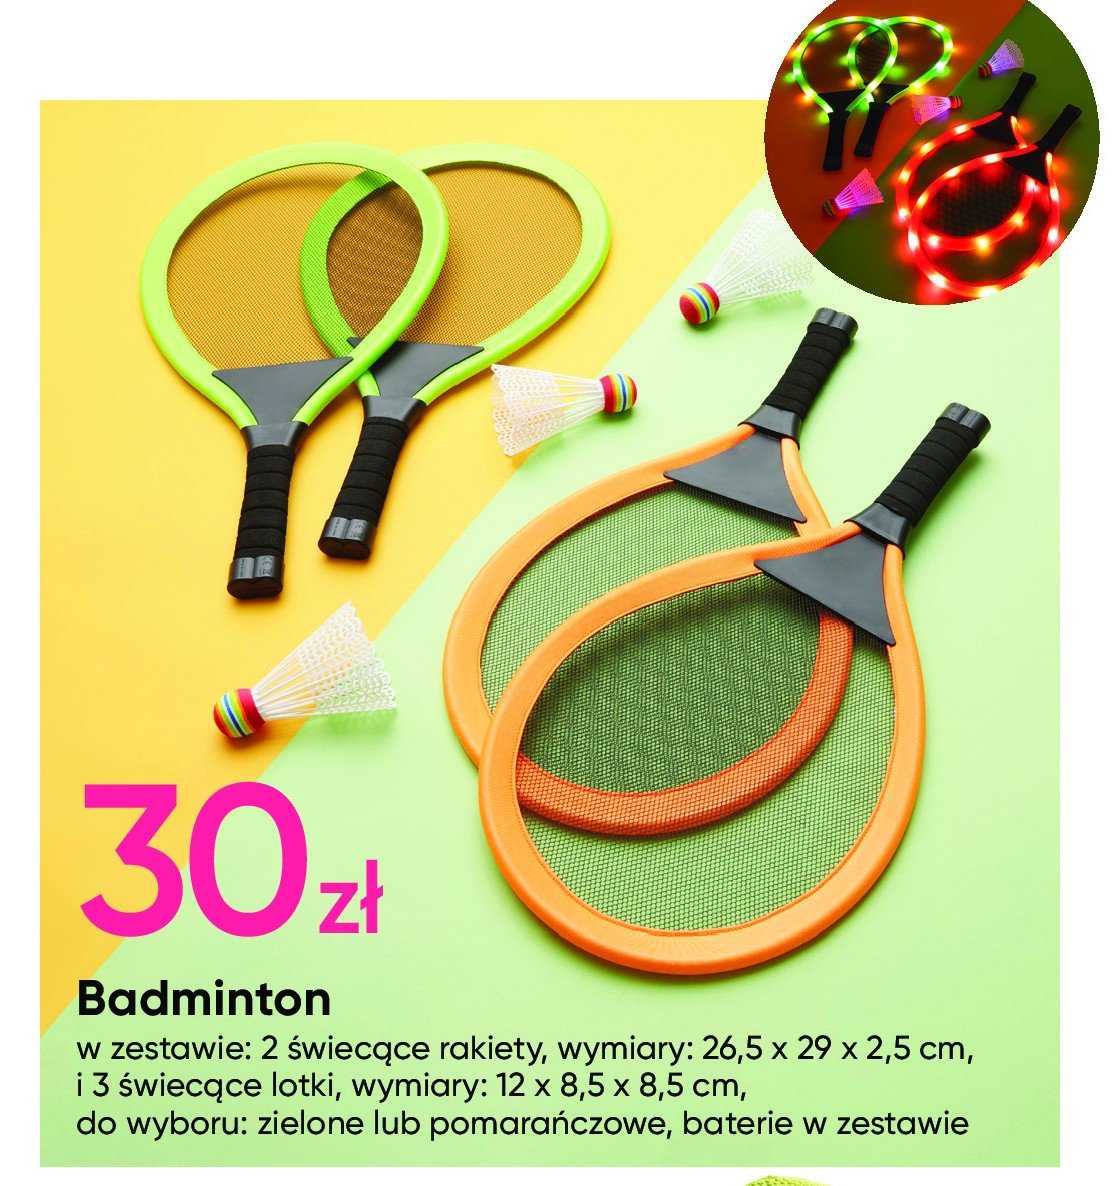 Badminton promocja